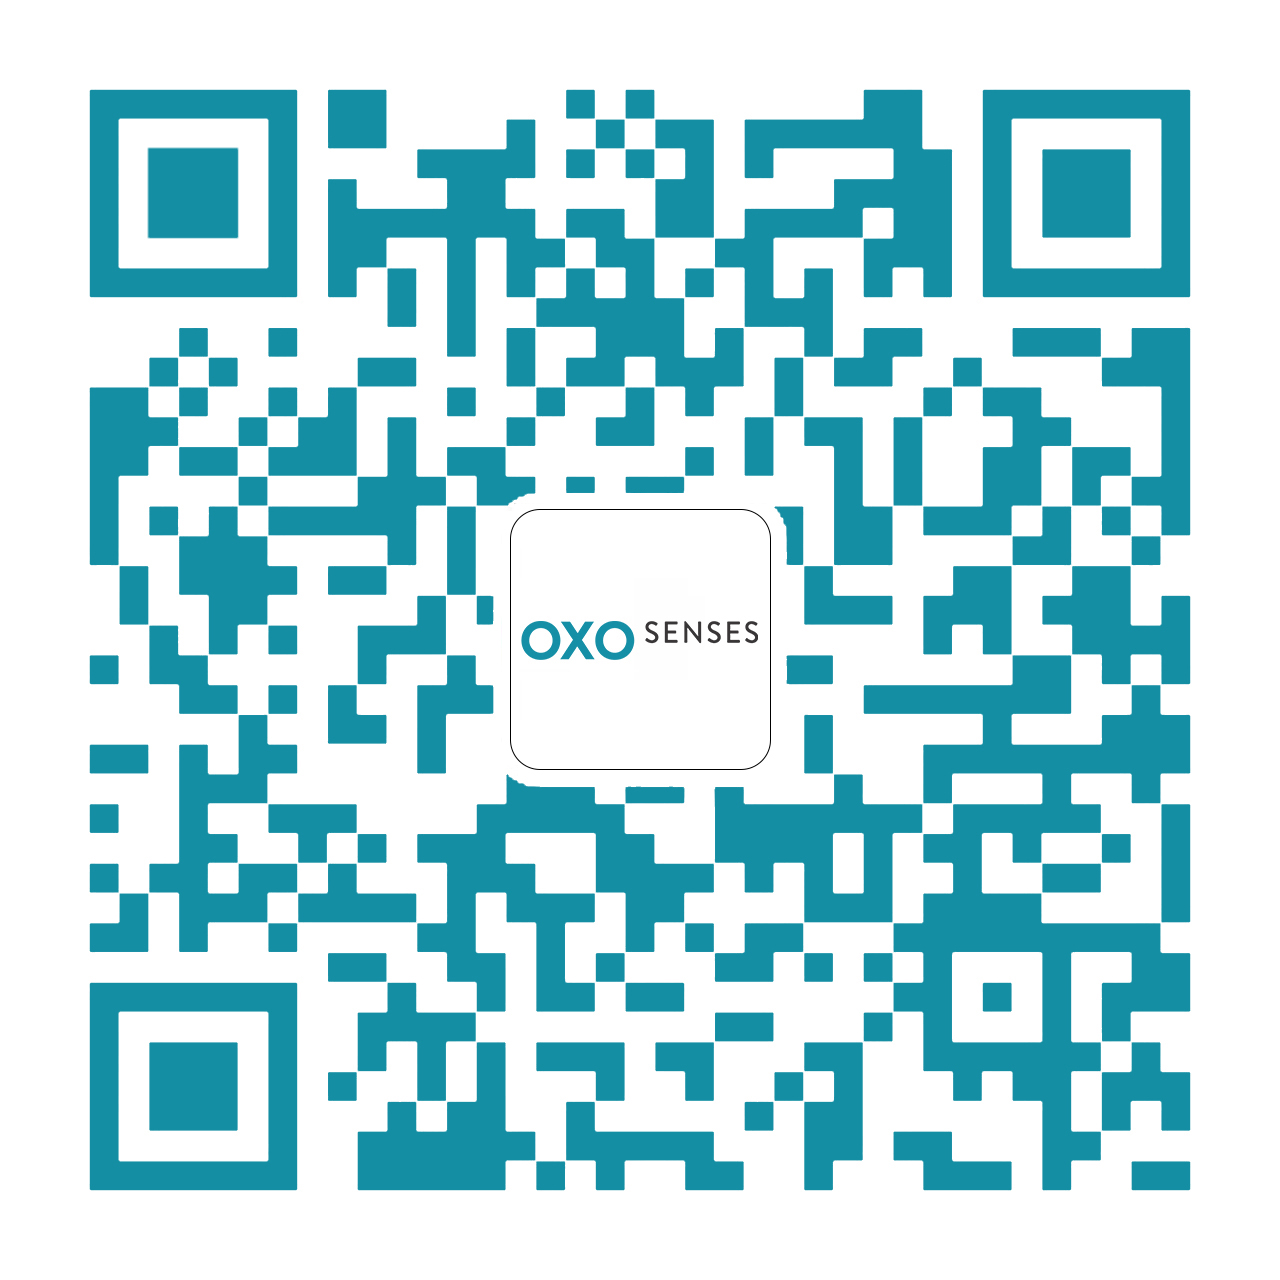 OXO Senses QR Code